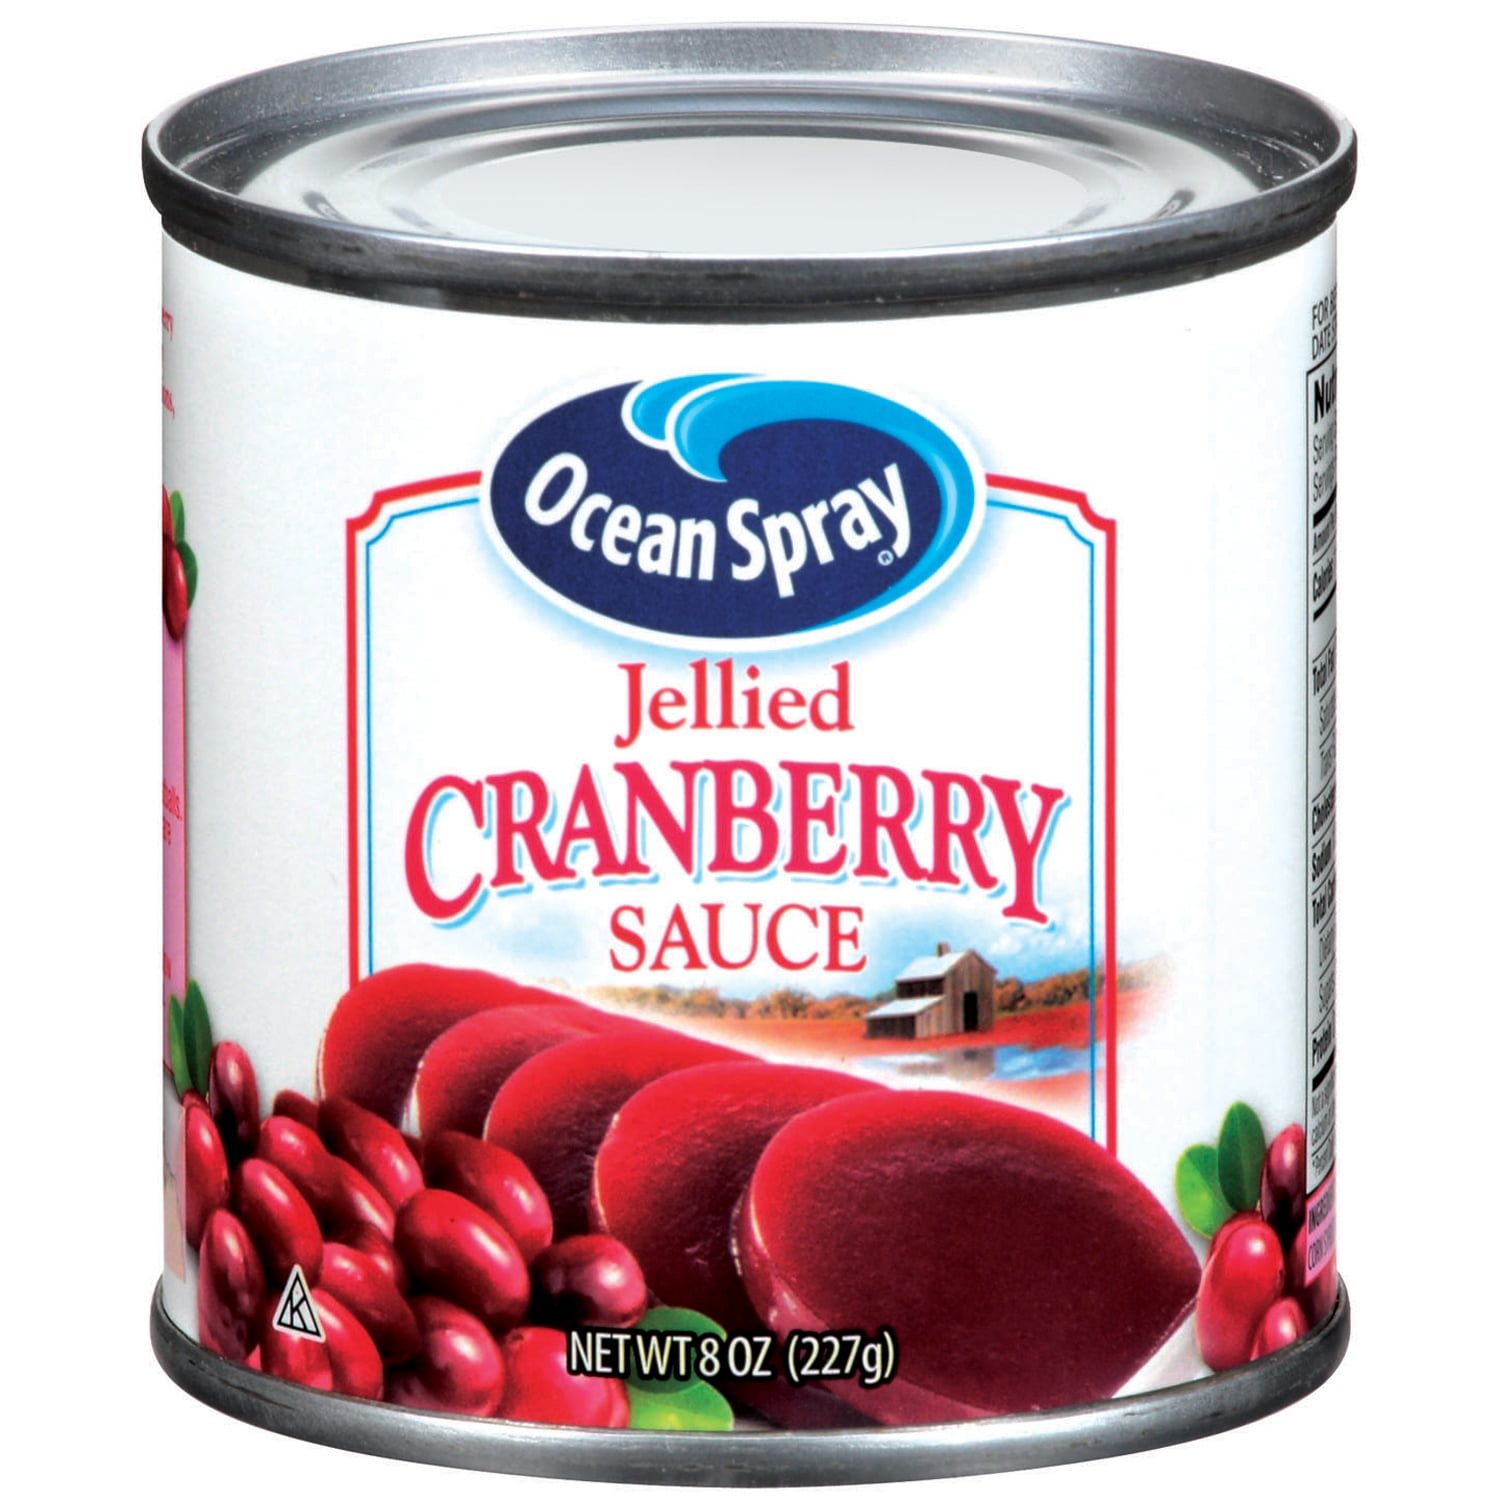 Ocean Spray Cranberry Sauce All in one Photos.